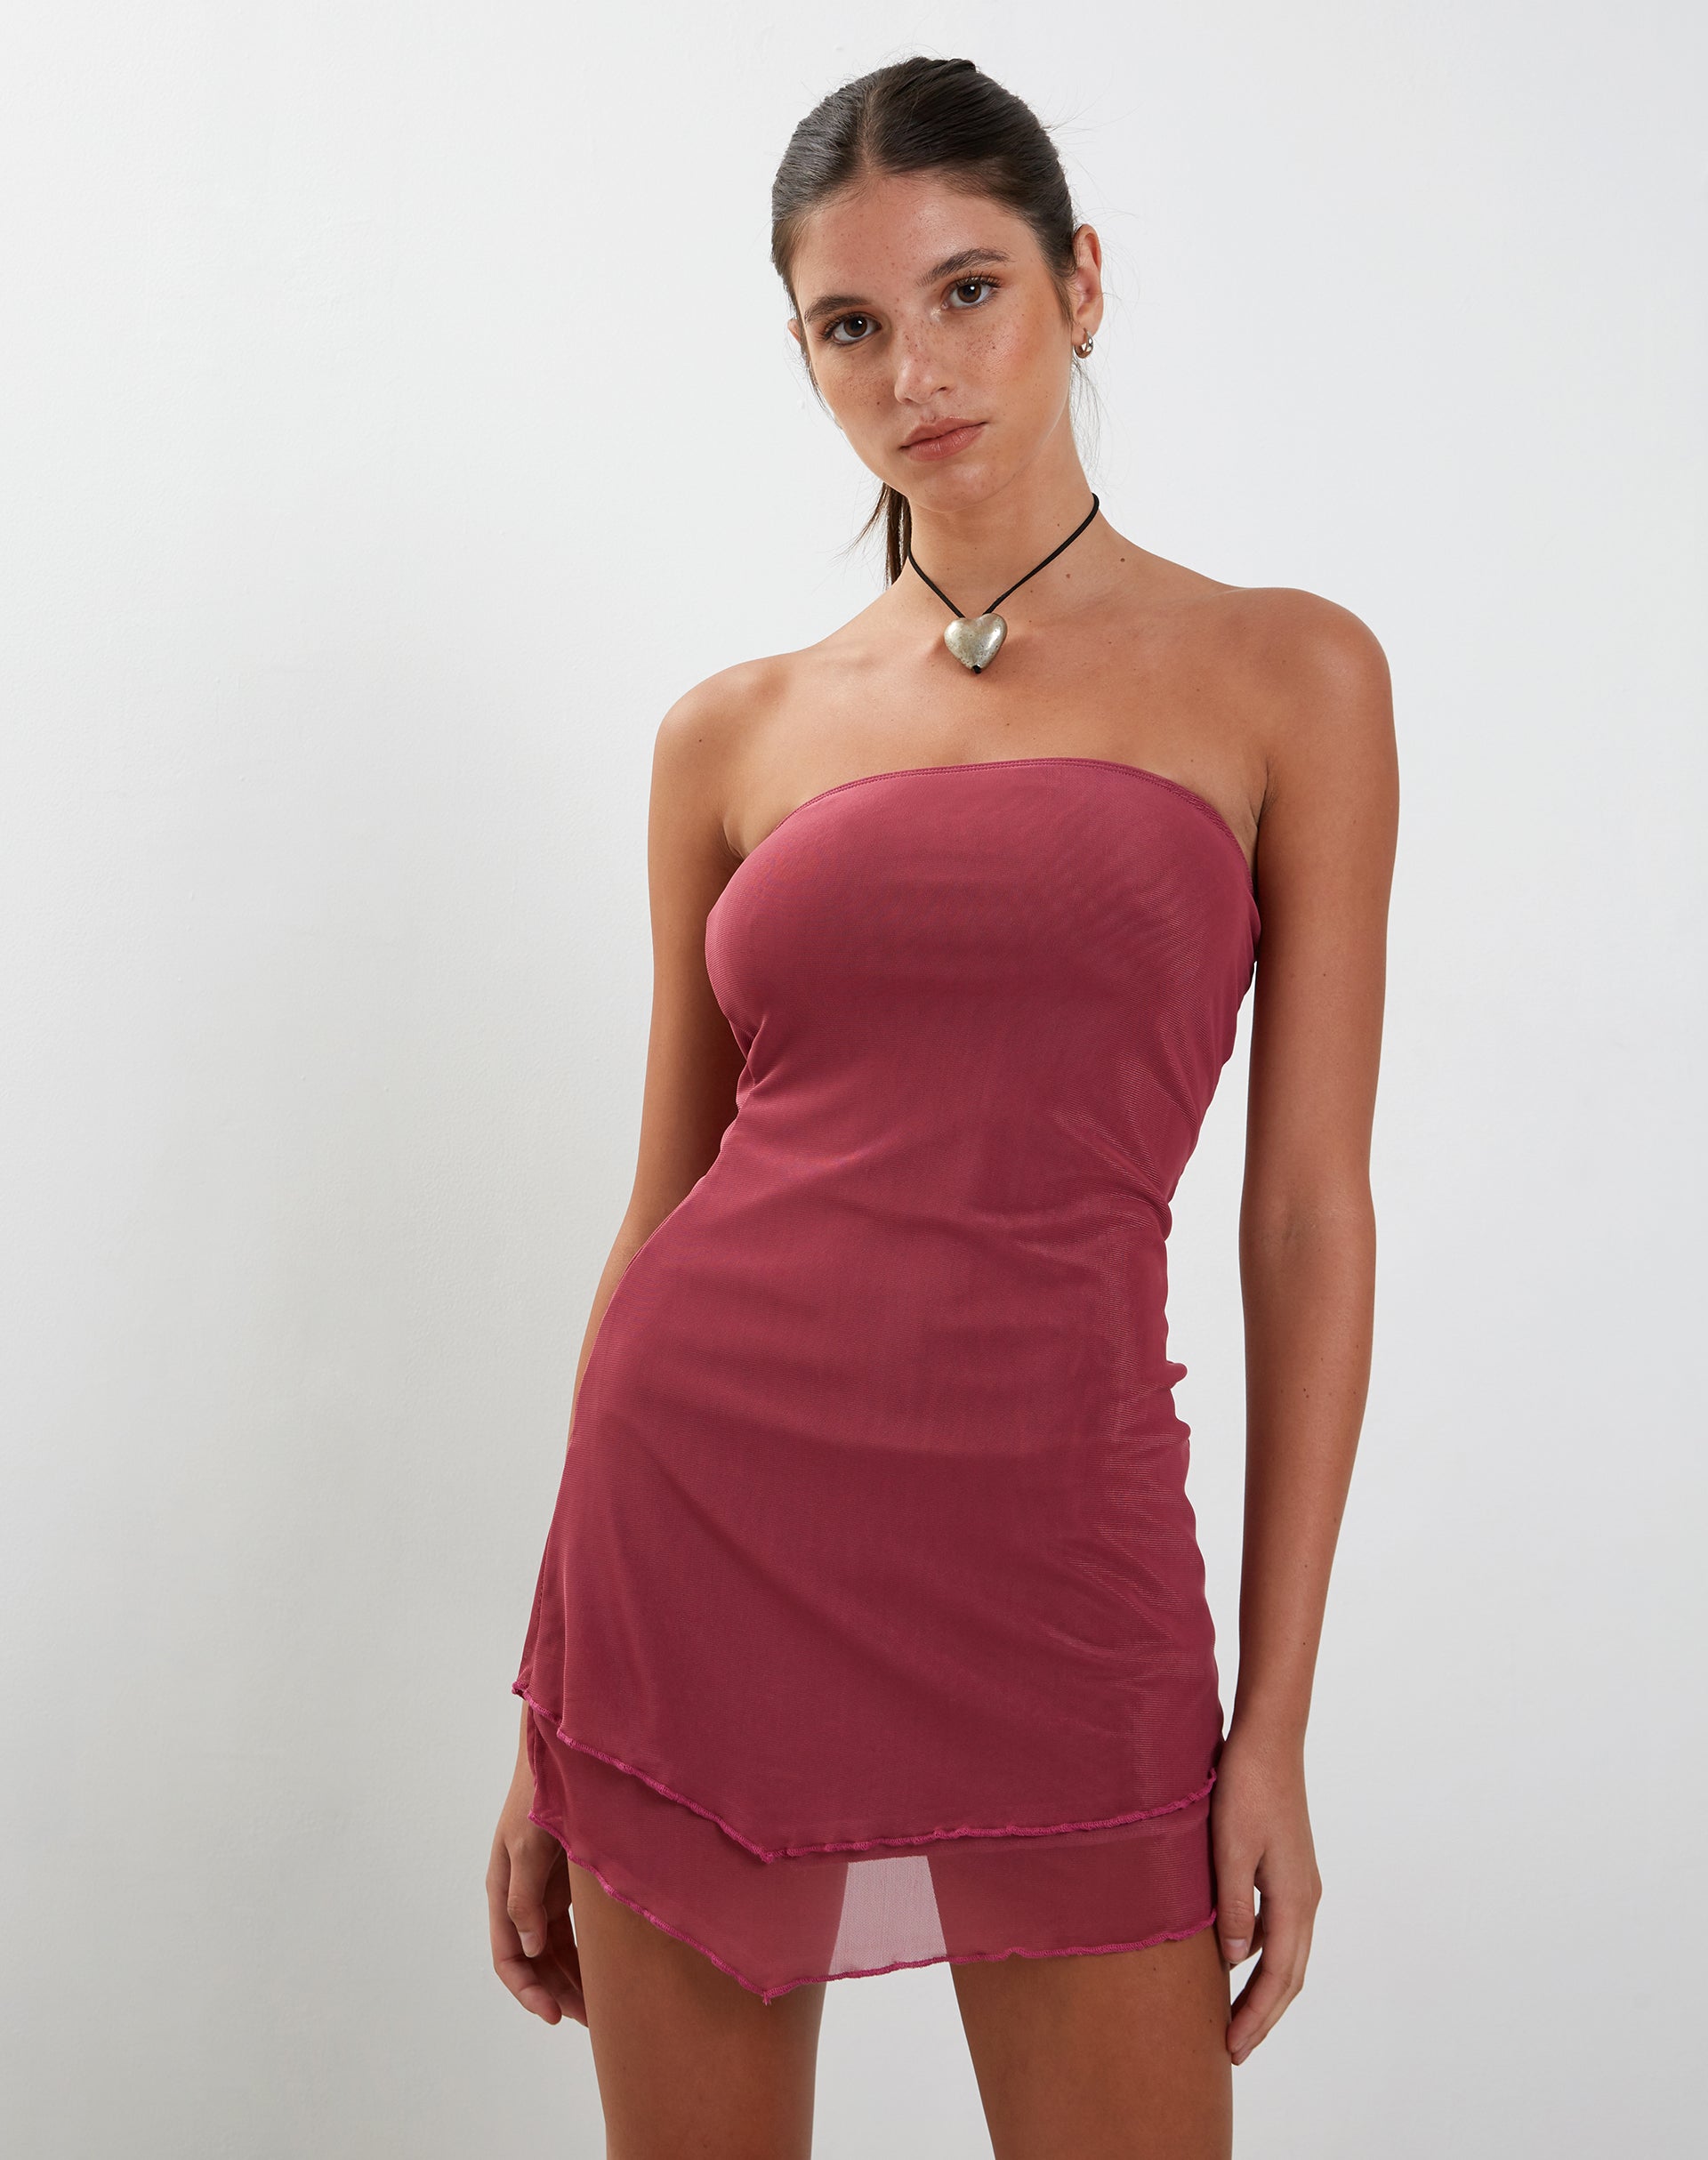 Mesh Cami Dress - Shop on Pinterest